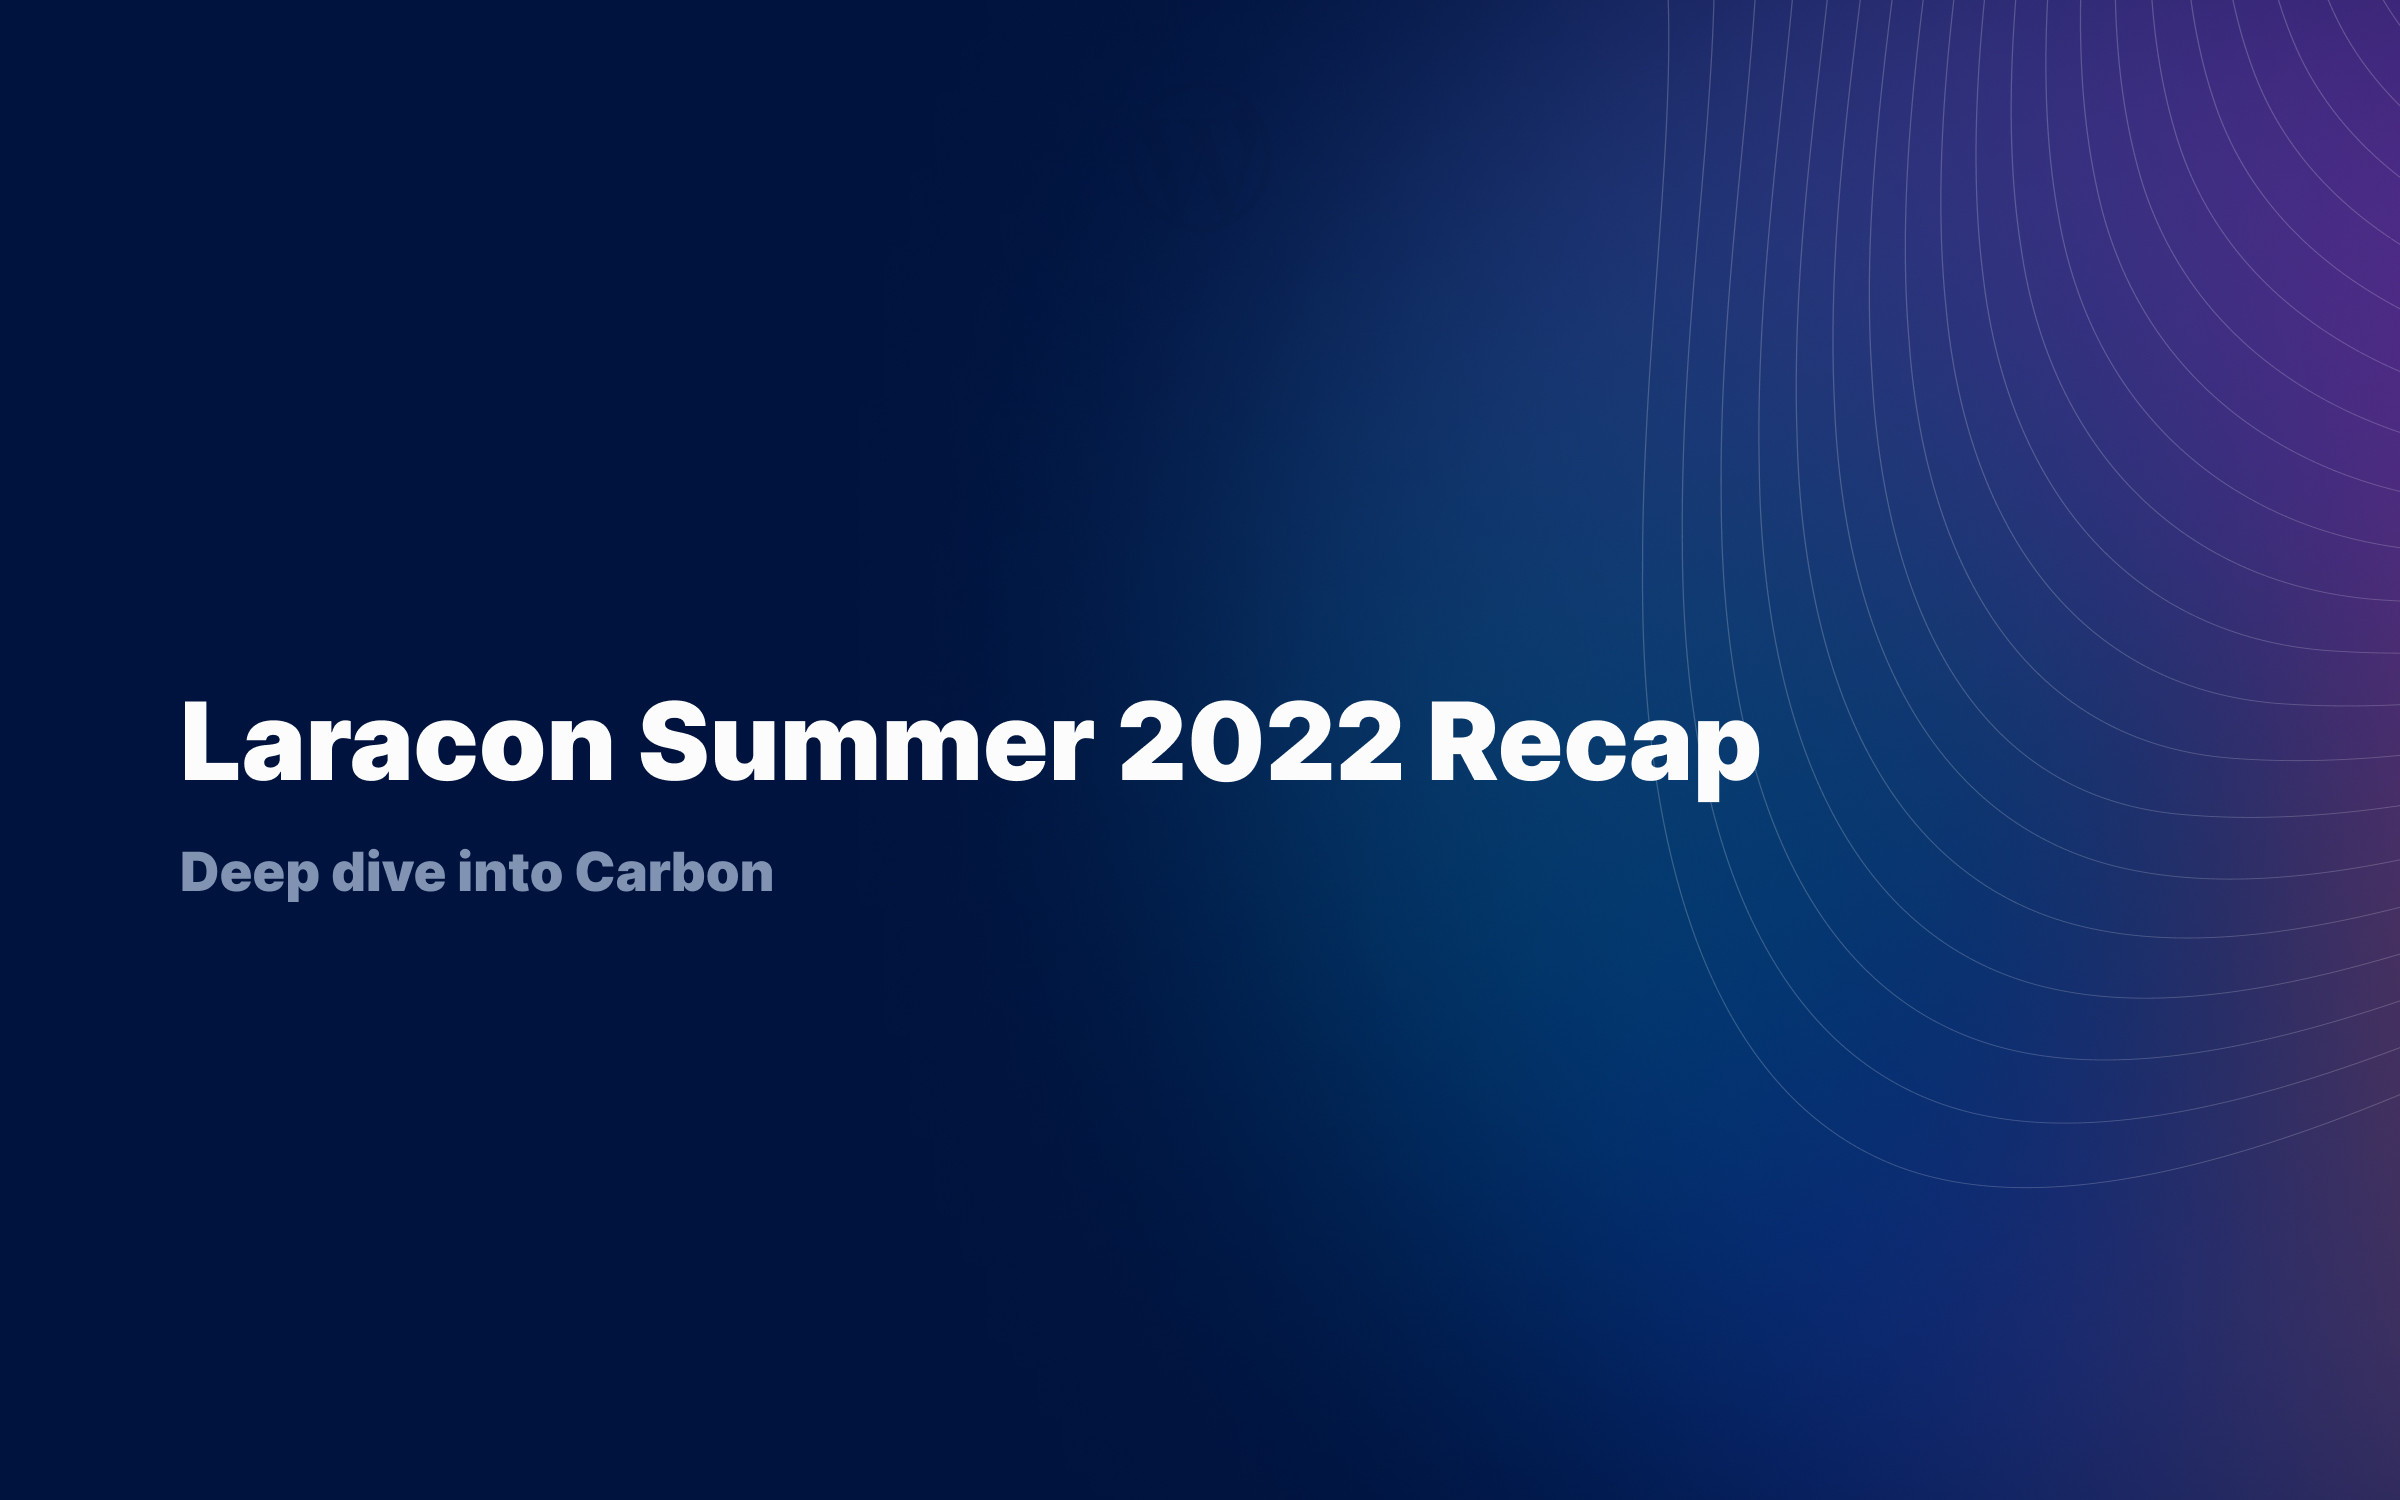 Deep dive into Carbon – Laracon Summer 2022 Recap